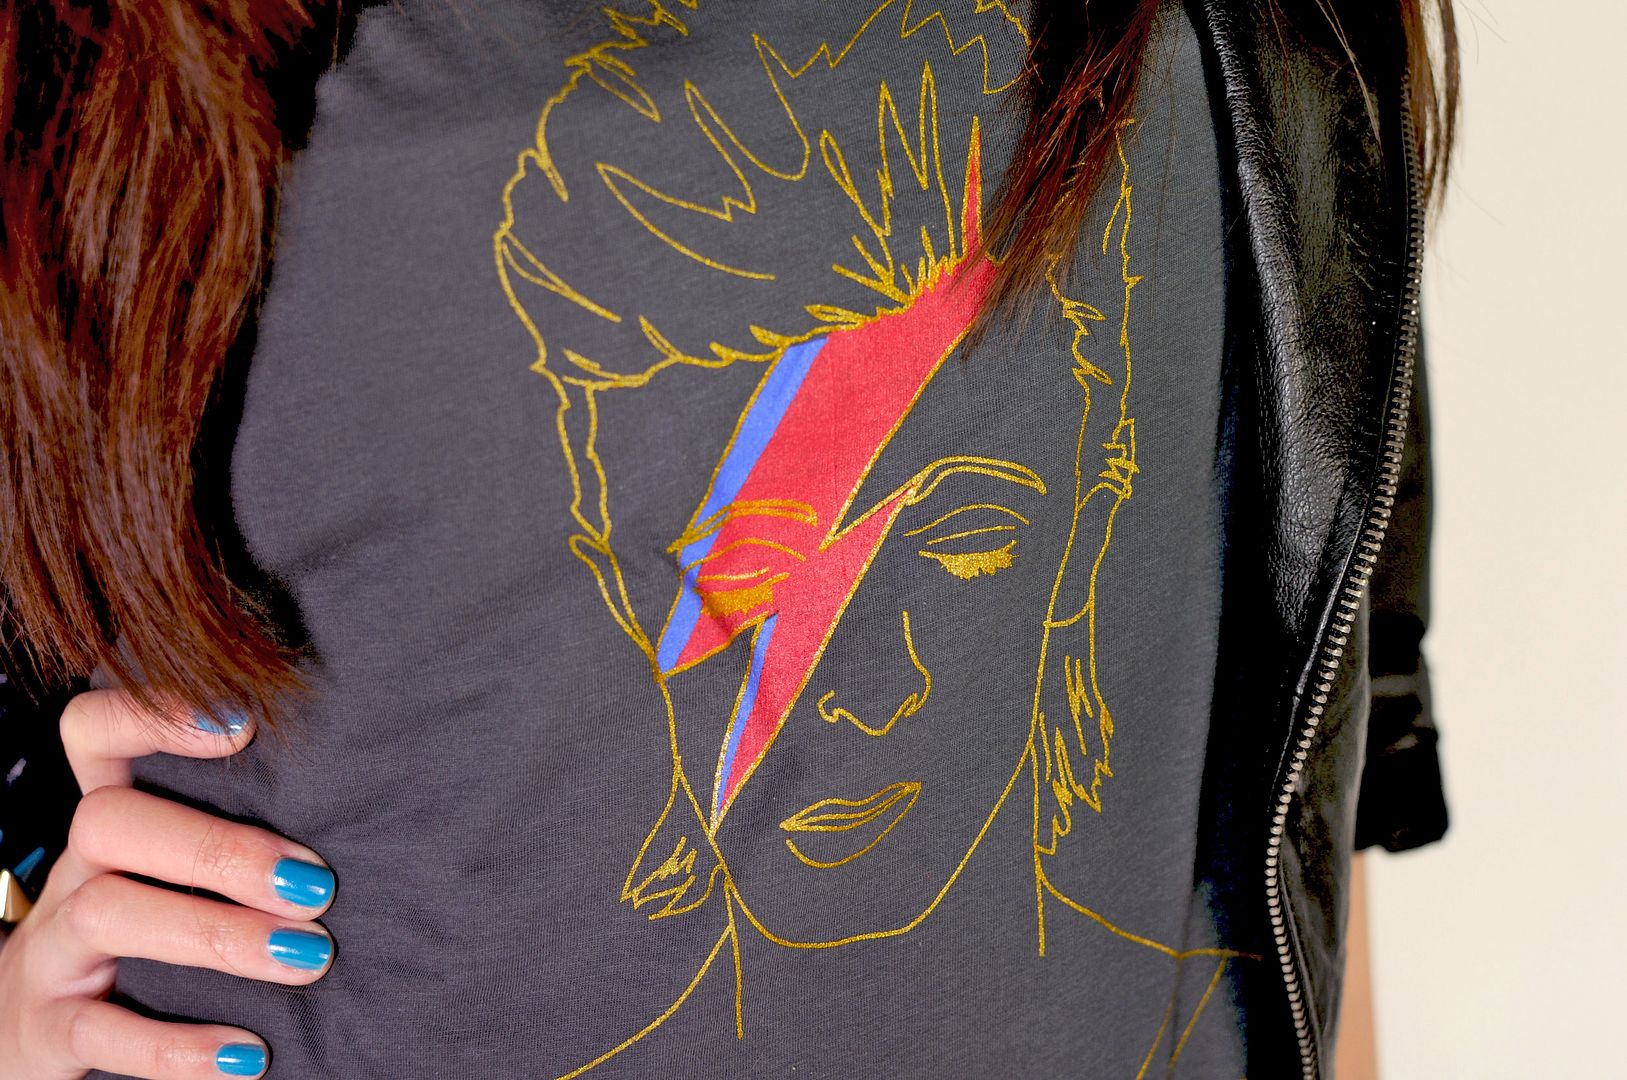 David Bowie tshirt, david bowie illustration tshirt